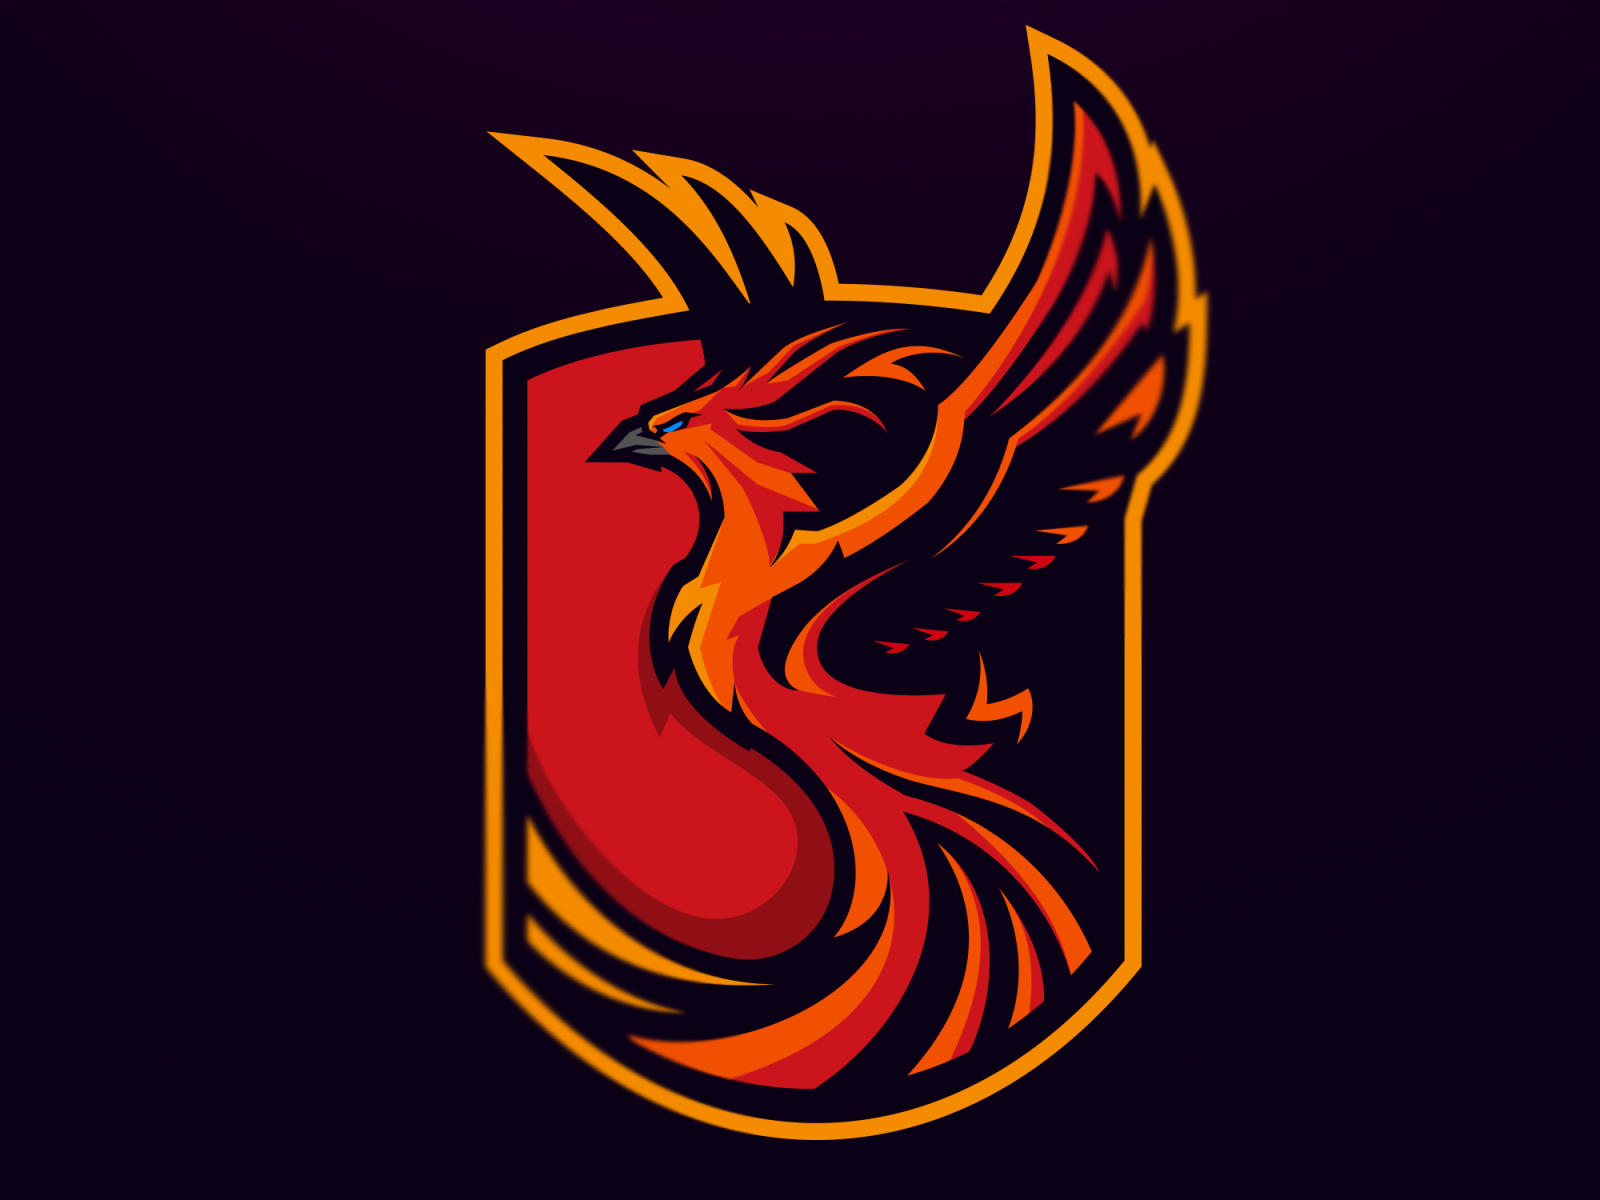 Black Phoenix head logo isolated on background with modern and creative  design representing Greek Mythology bird 28585260 Stock Photo at Vecteezy